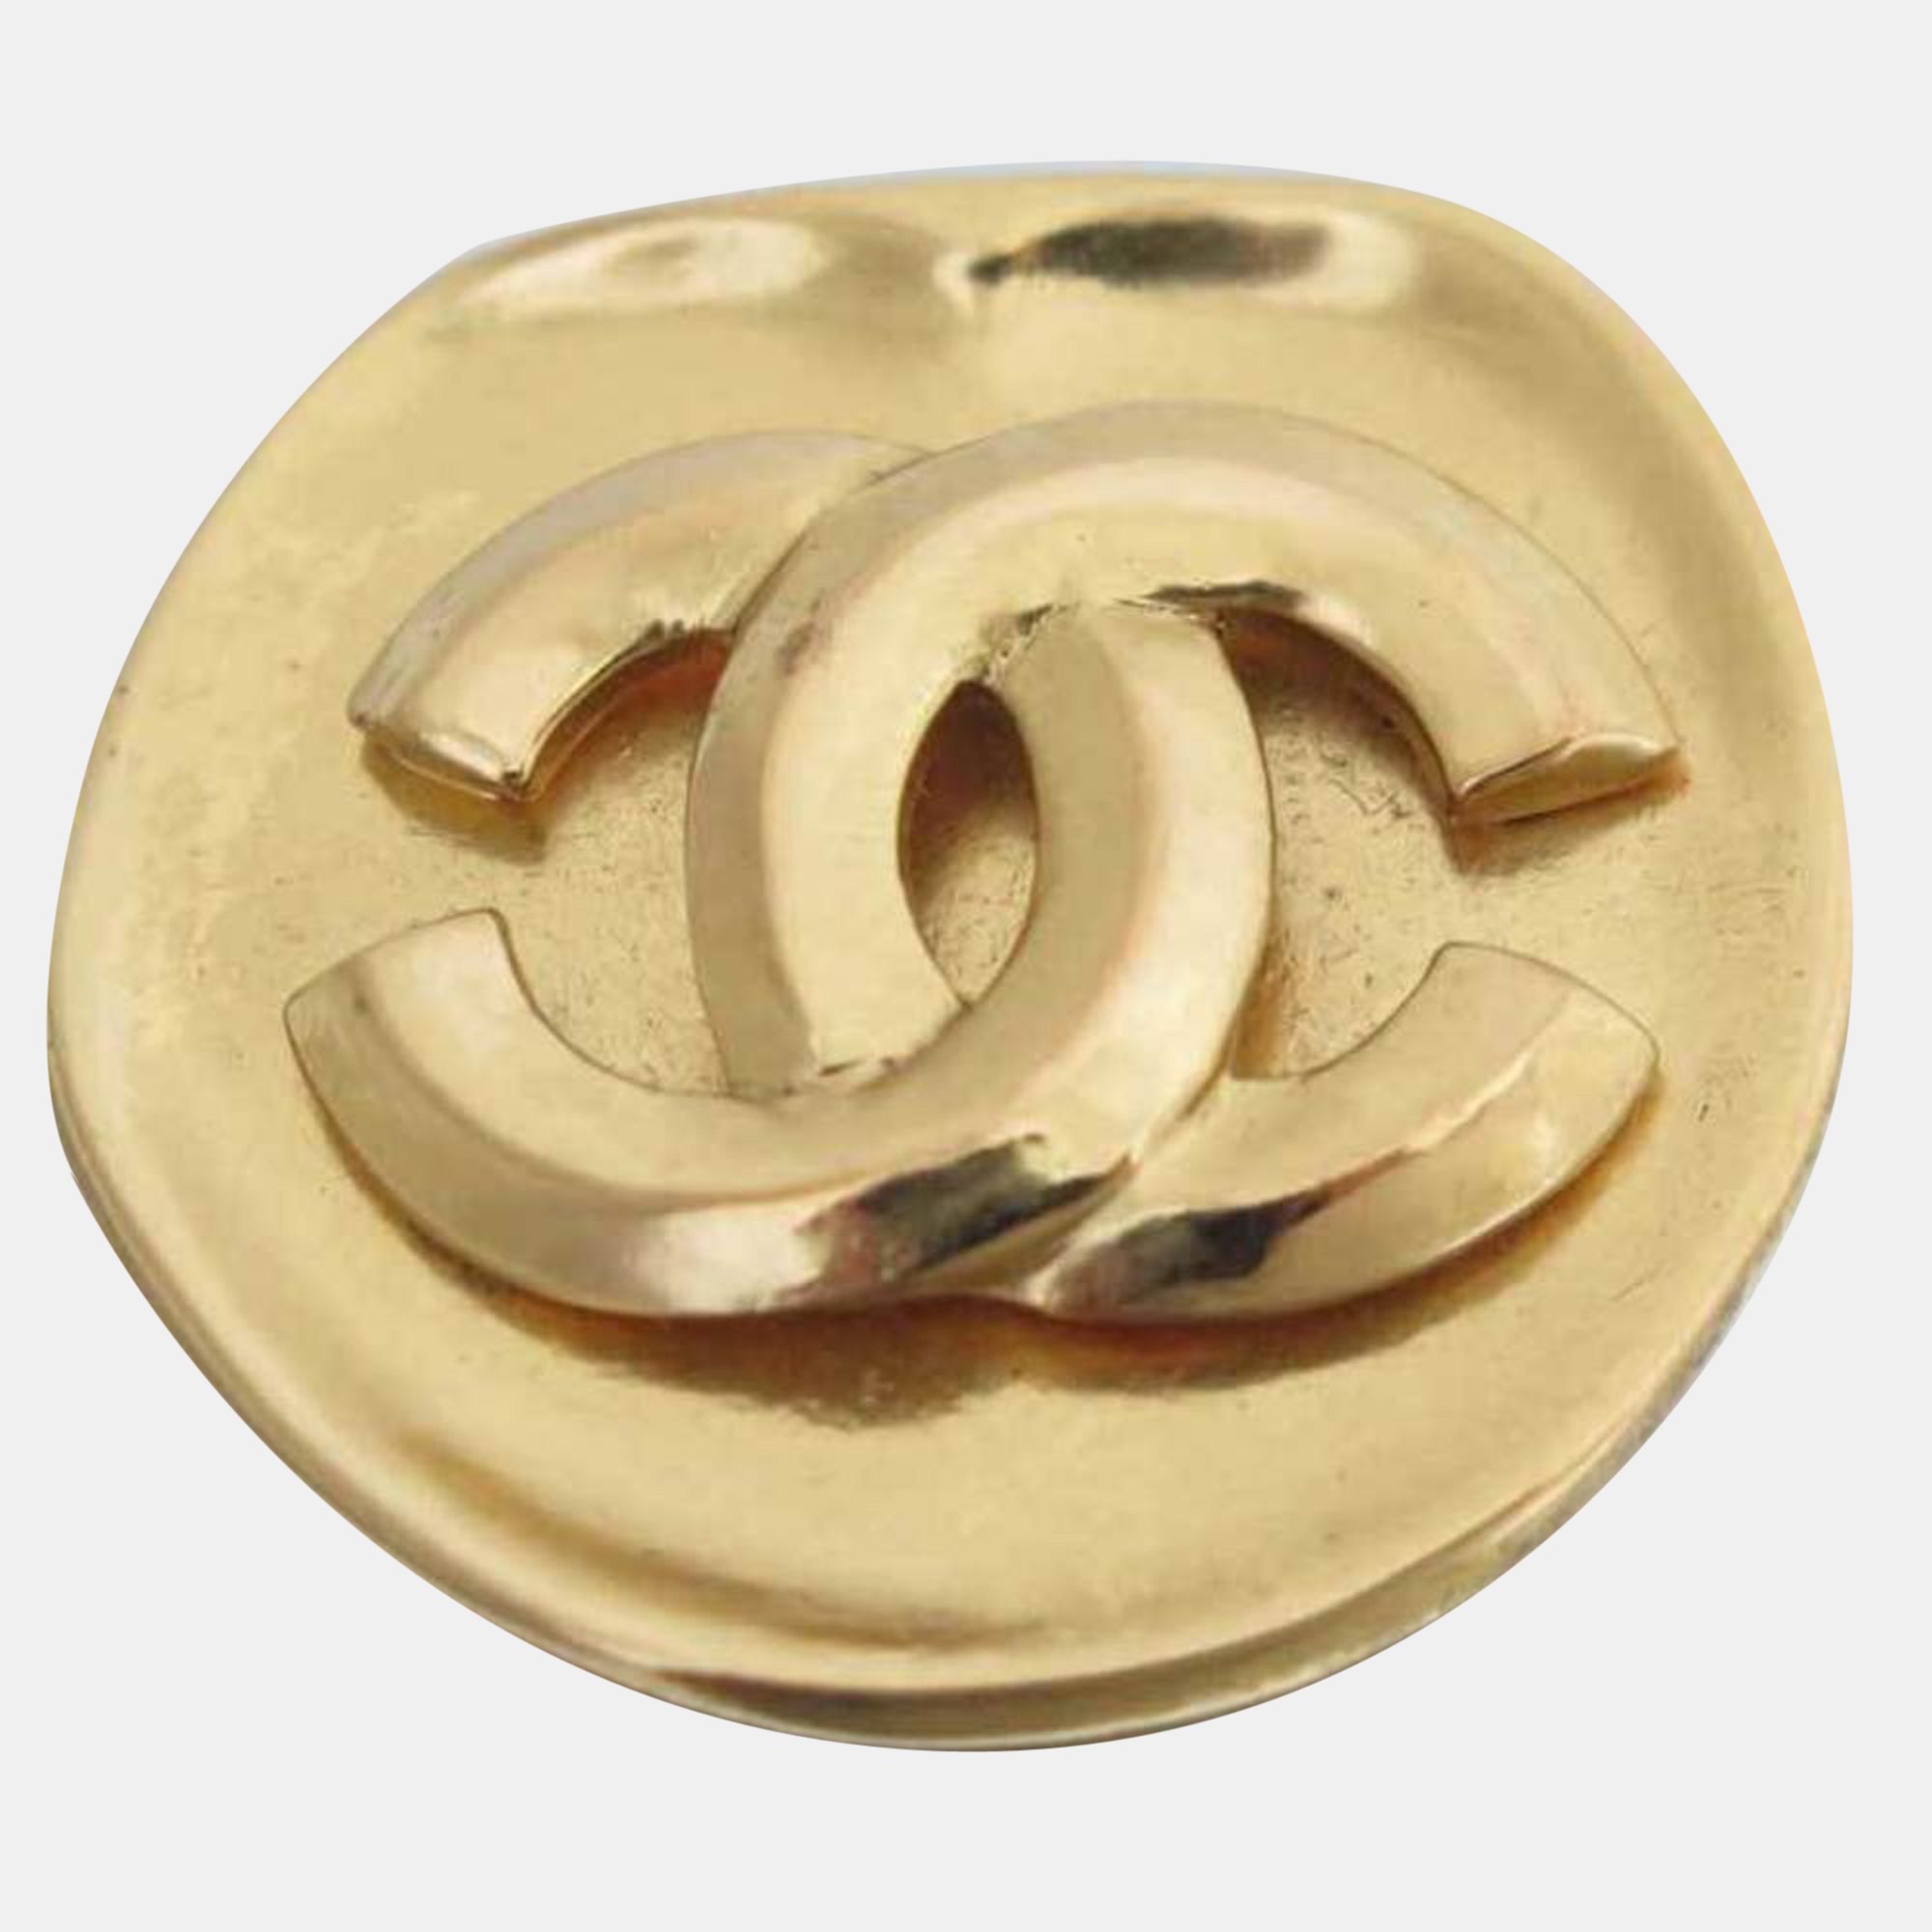 Chanel Palm Tree Pin - Gold-Tone Metal Pin, Brooches - CHA126384